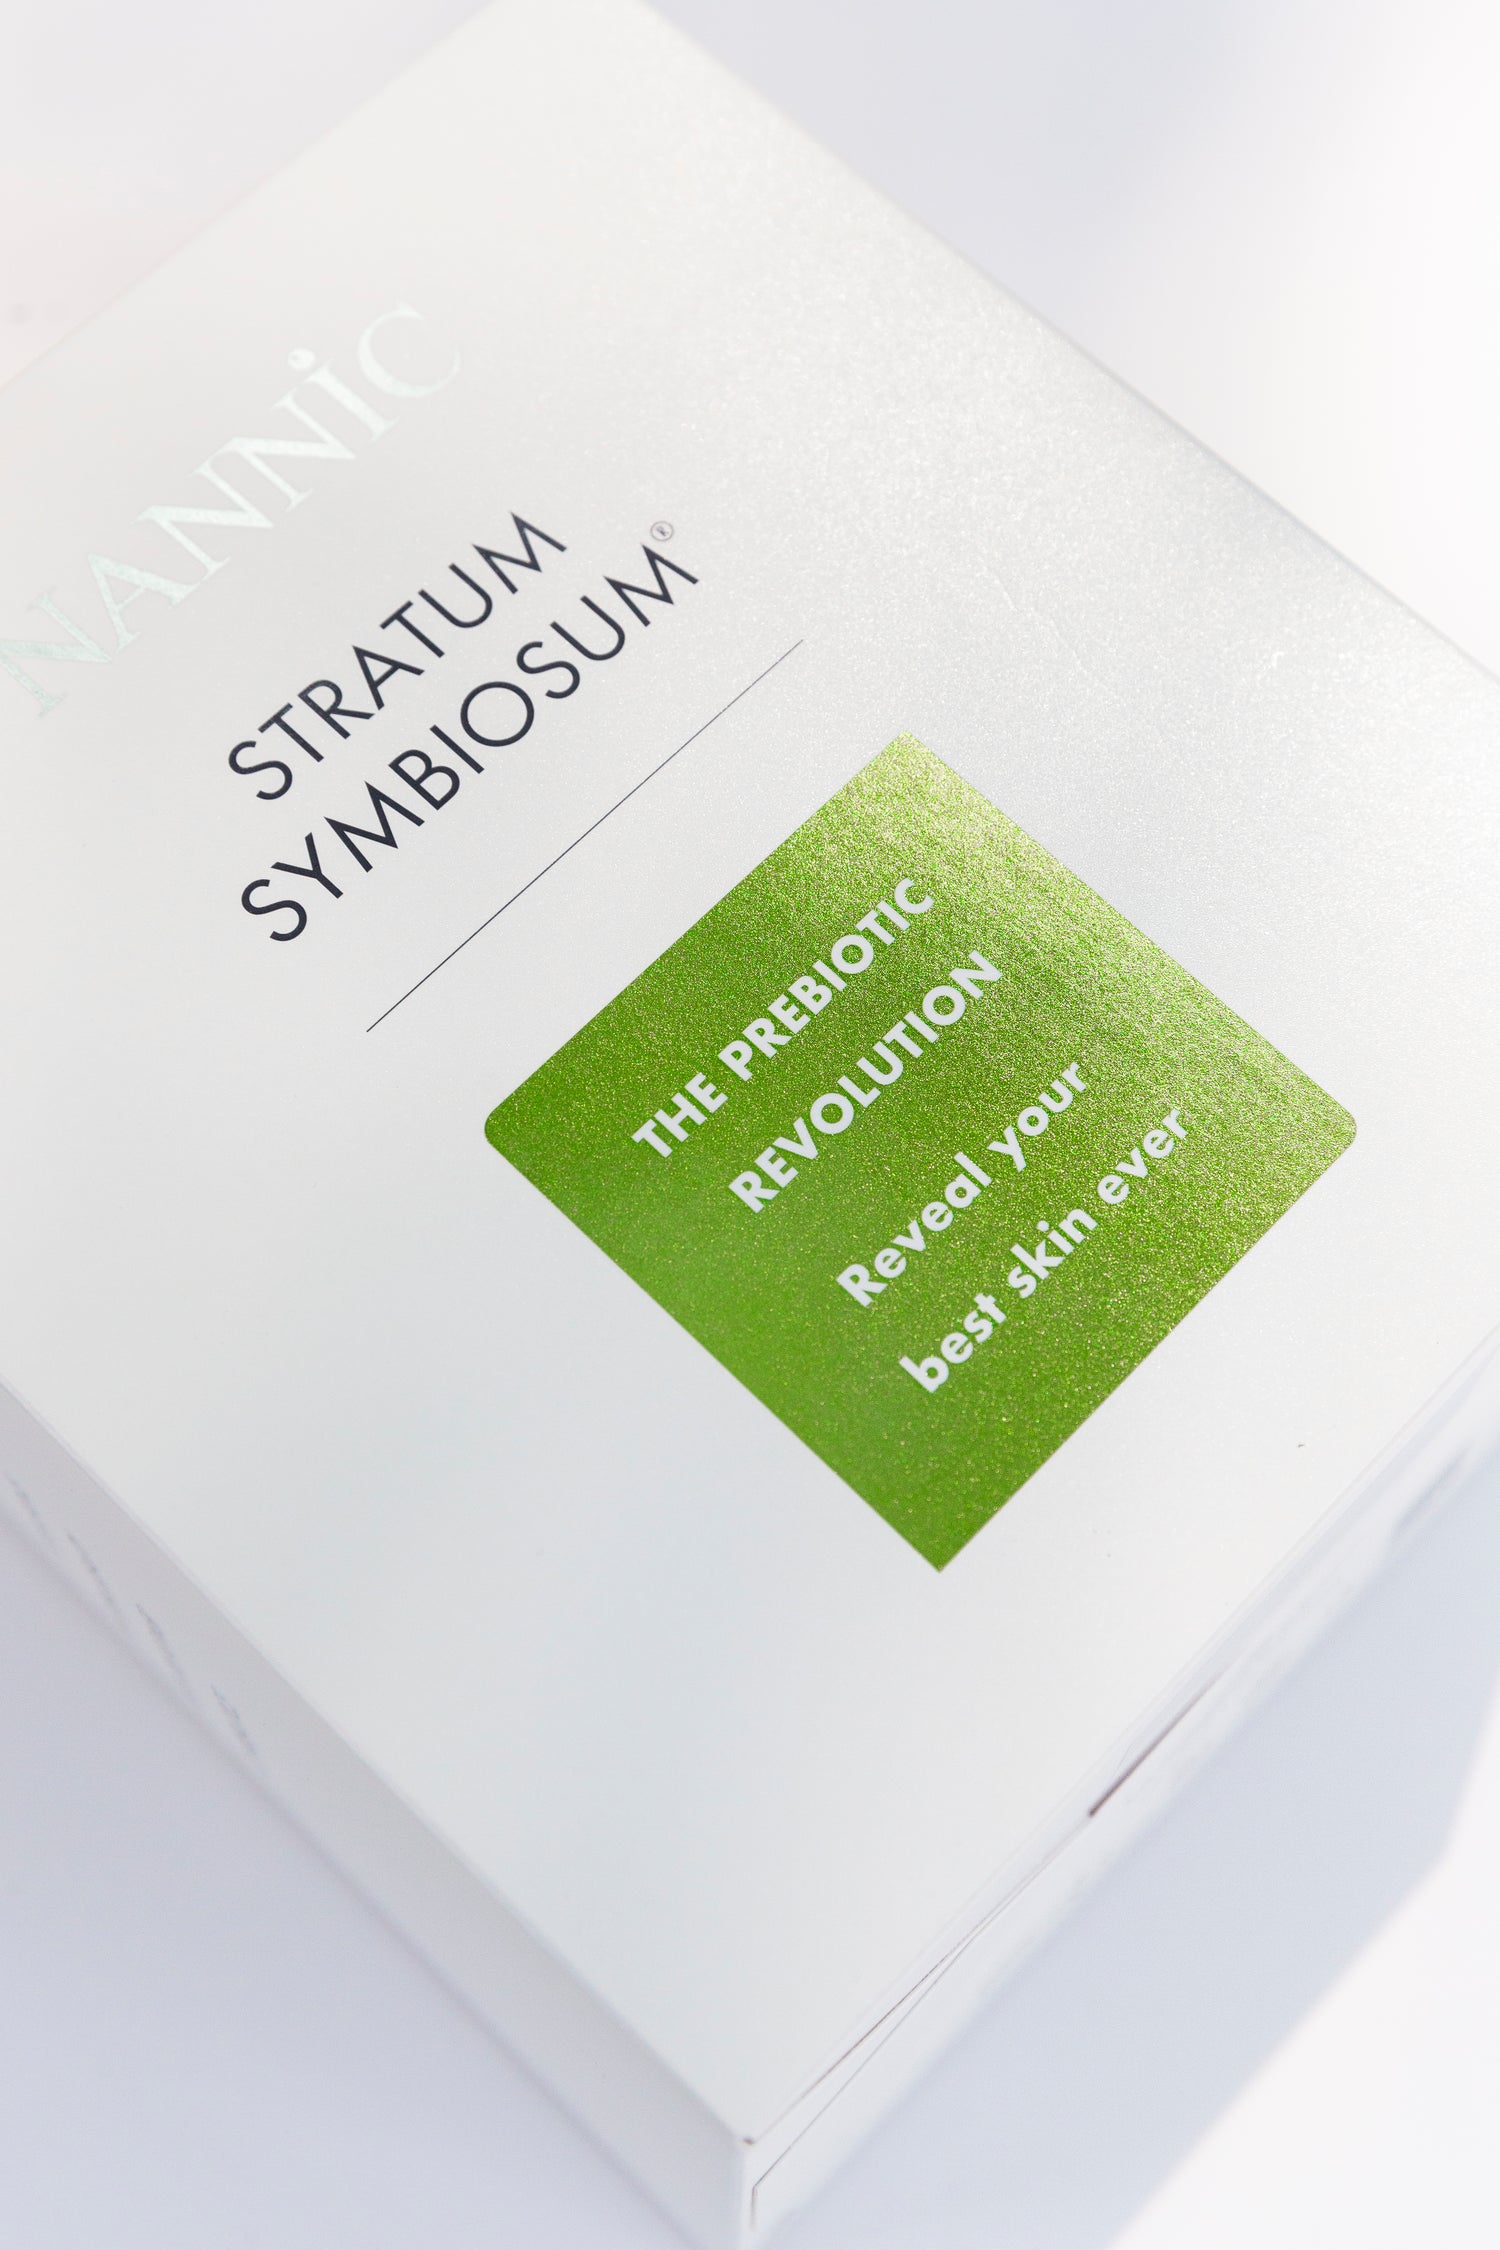 Prebiotic Start Up Box Stratum Symbiosum®